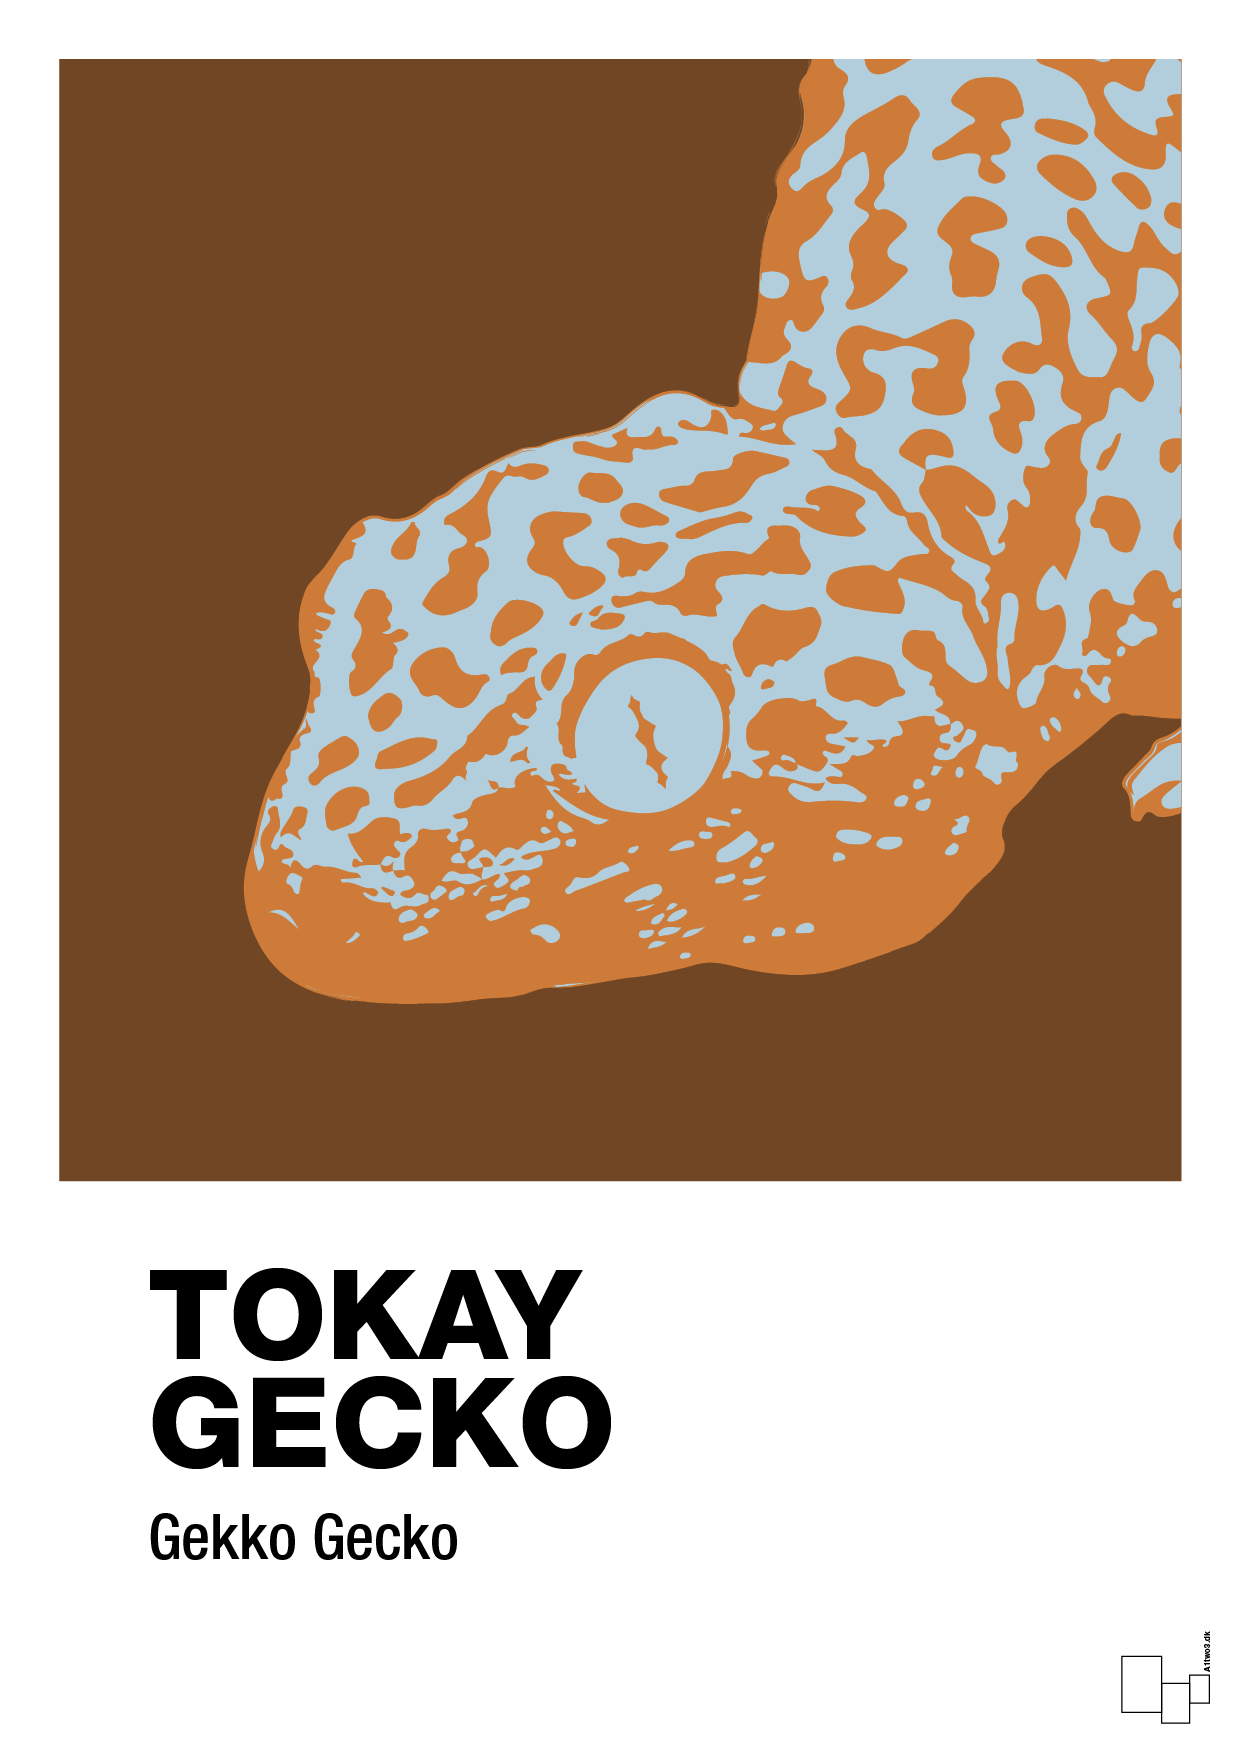 tokay gecko - Plakat med Videnskab i Dark Brown